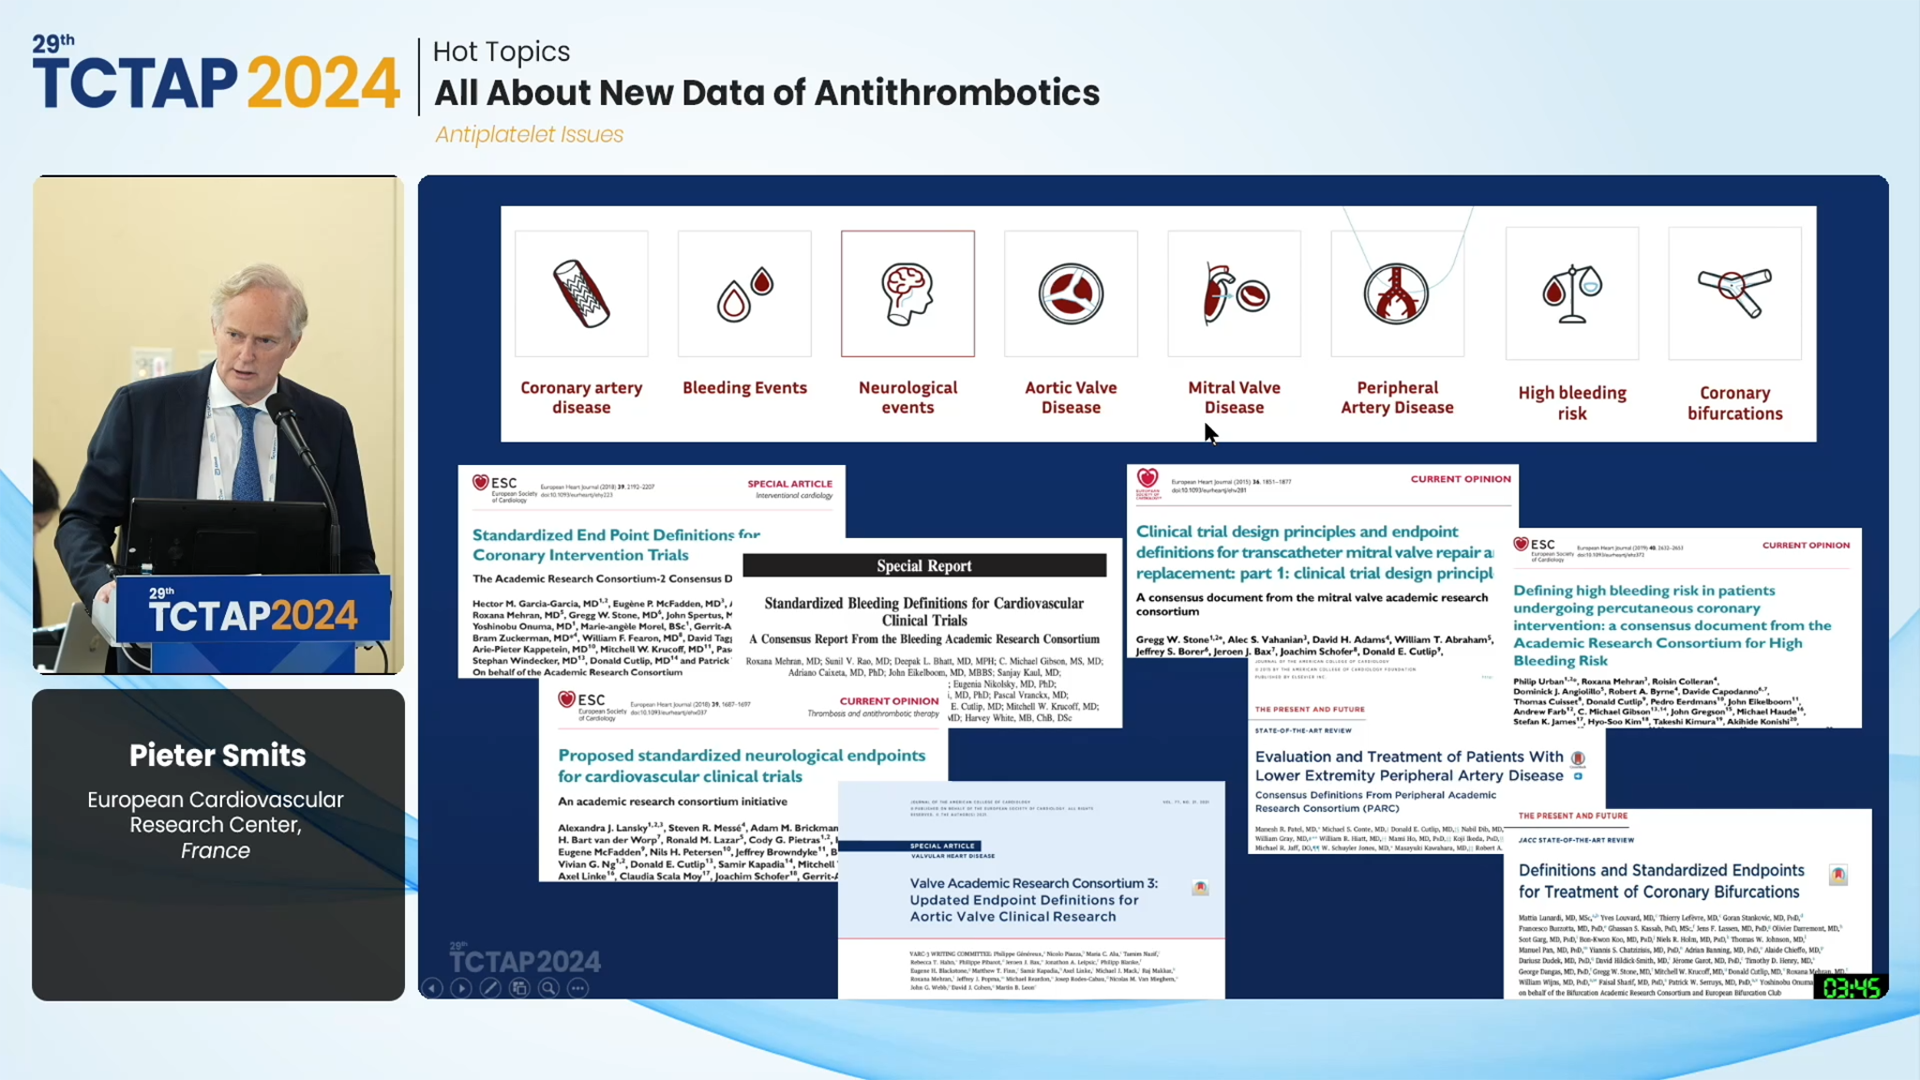 [Hot Topics] All About New Data of Antithrombotics